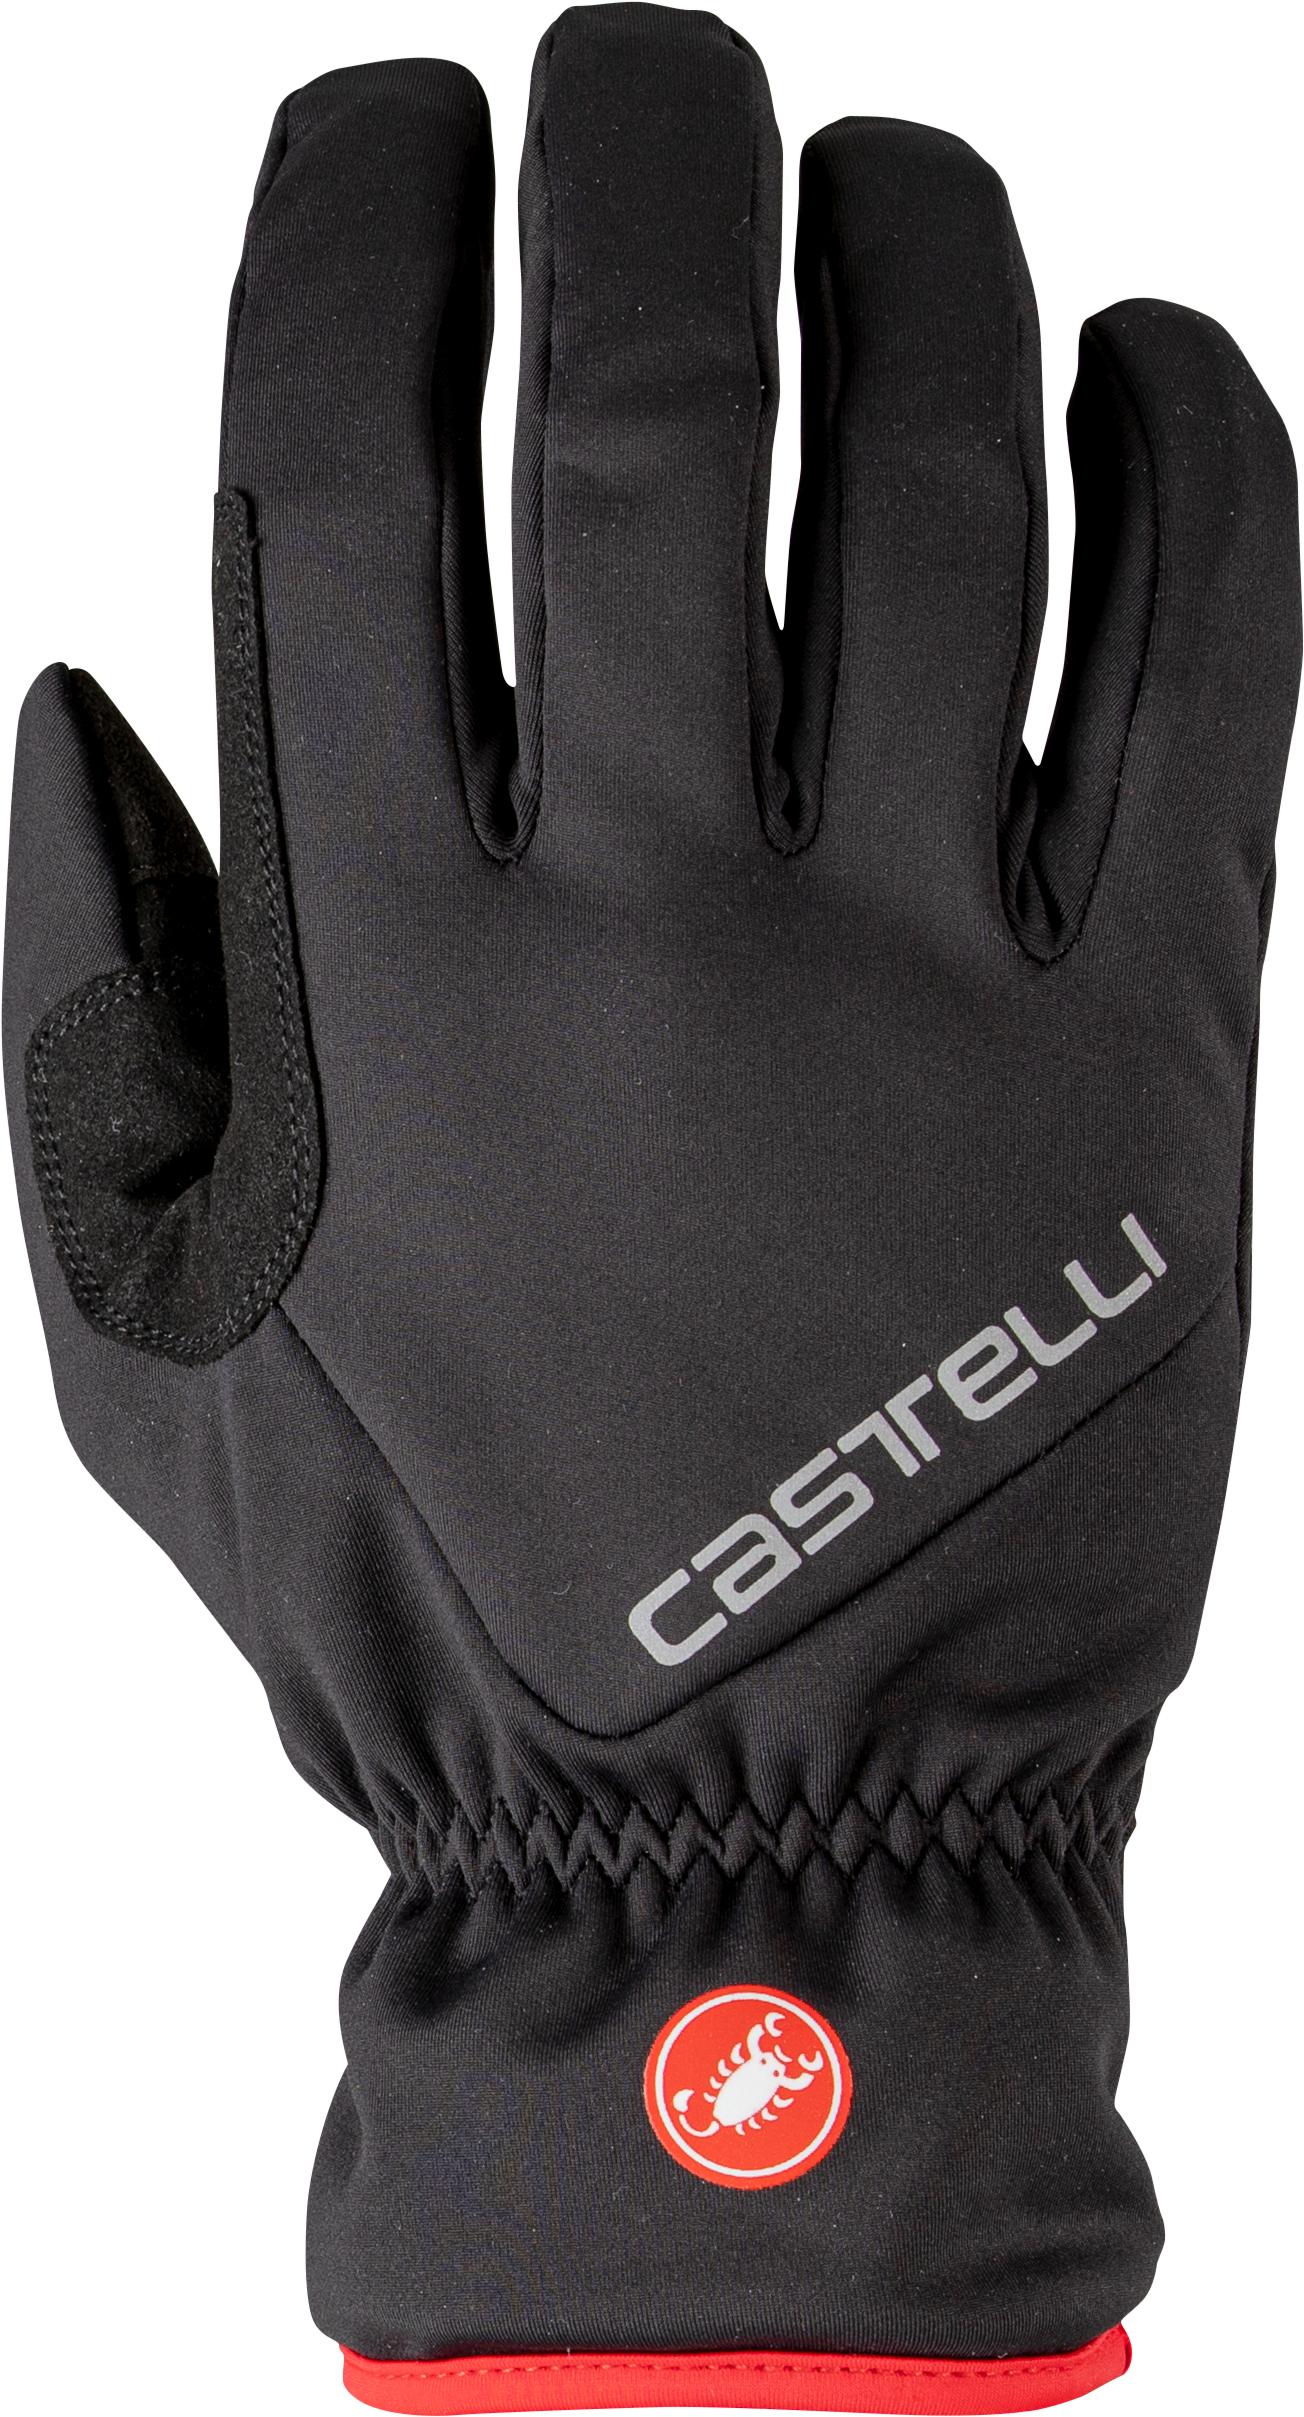 Castelli Entrata Thermal Cycling Glove  Black